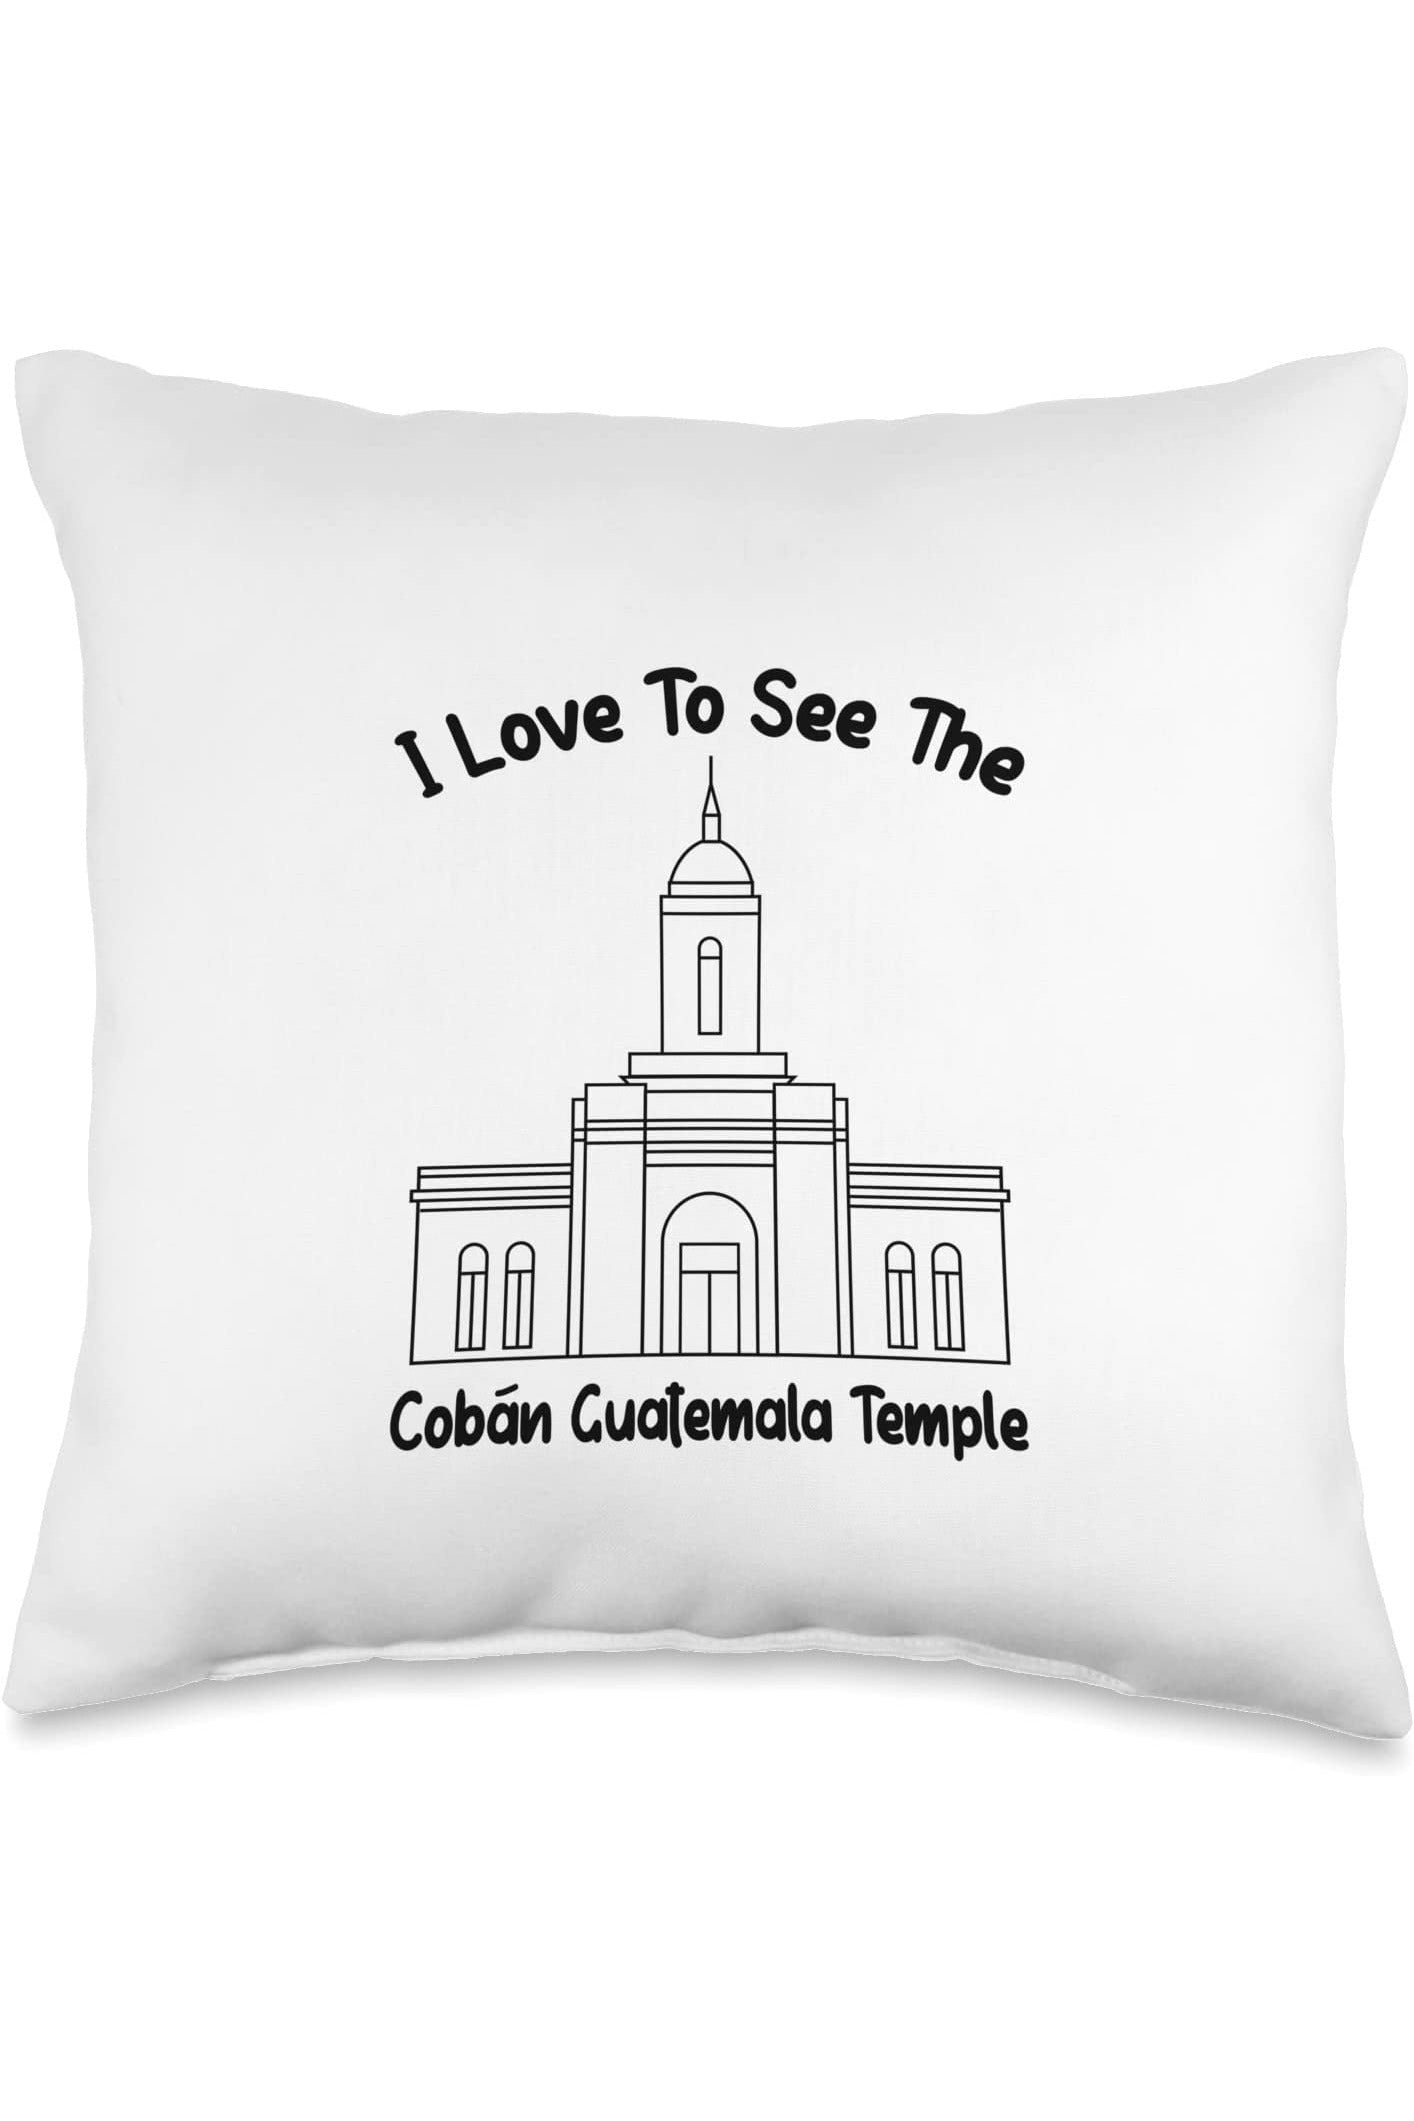 Coban Guatemala Temple Throw Pillows - Primary Style (English) US